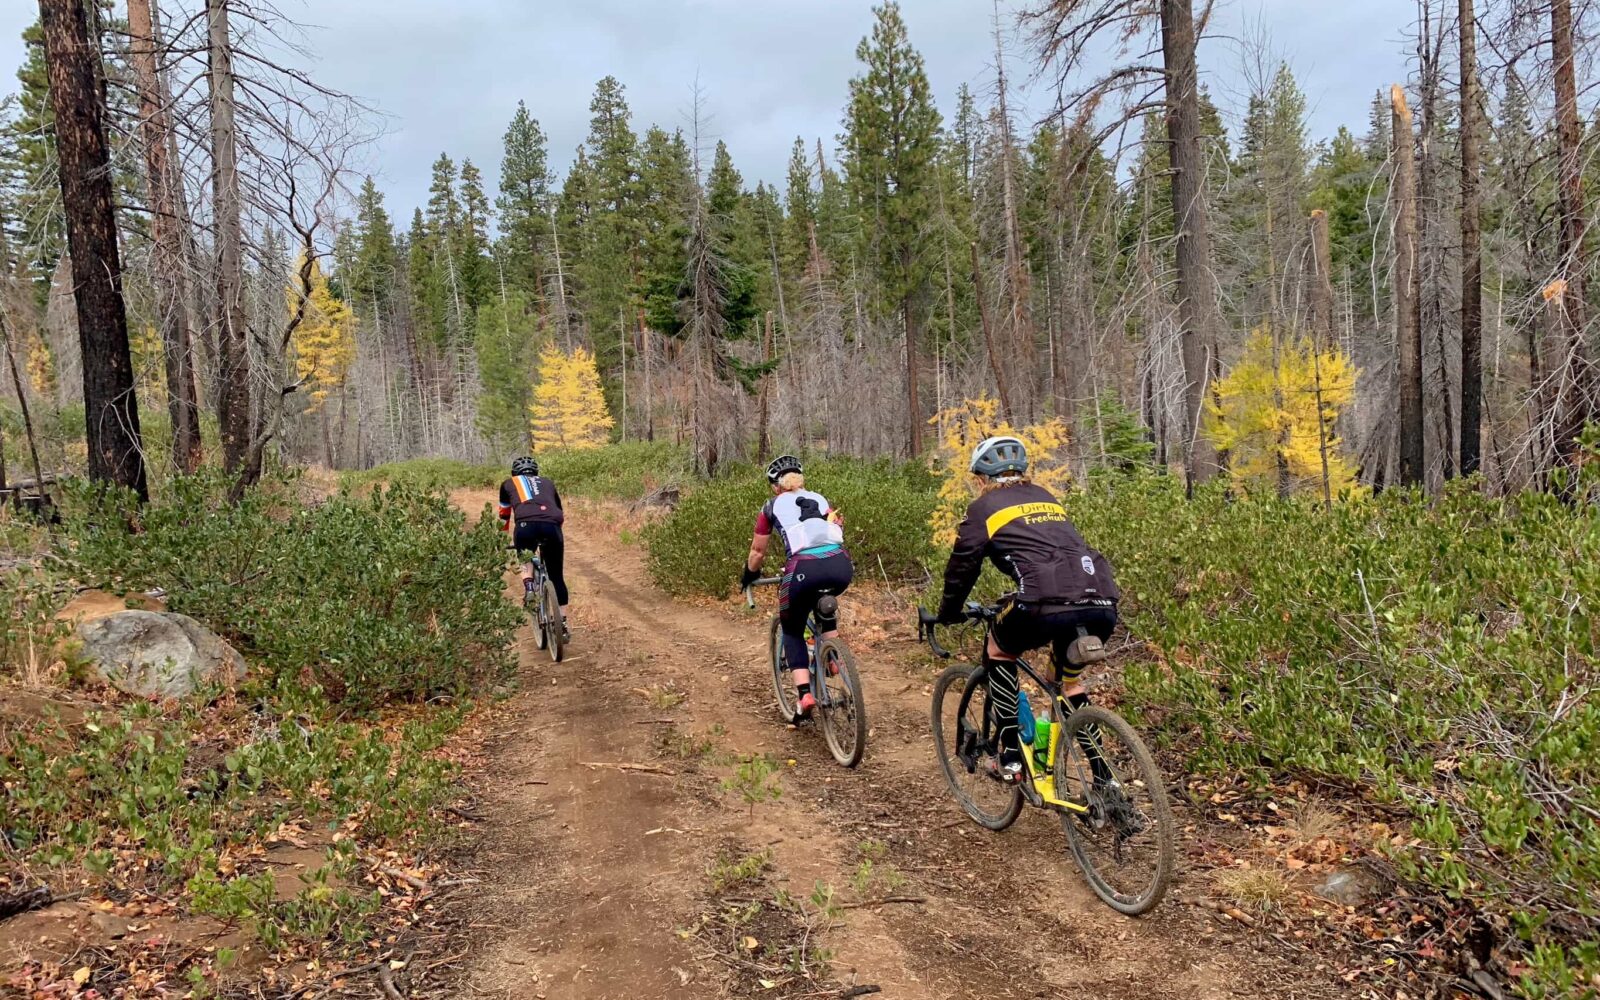 Three gravel bike riders on primitive forest roads.